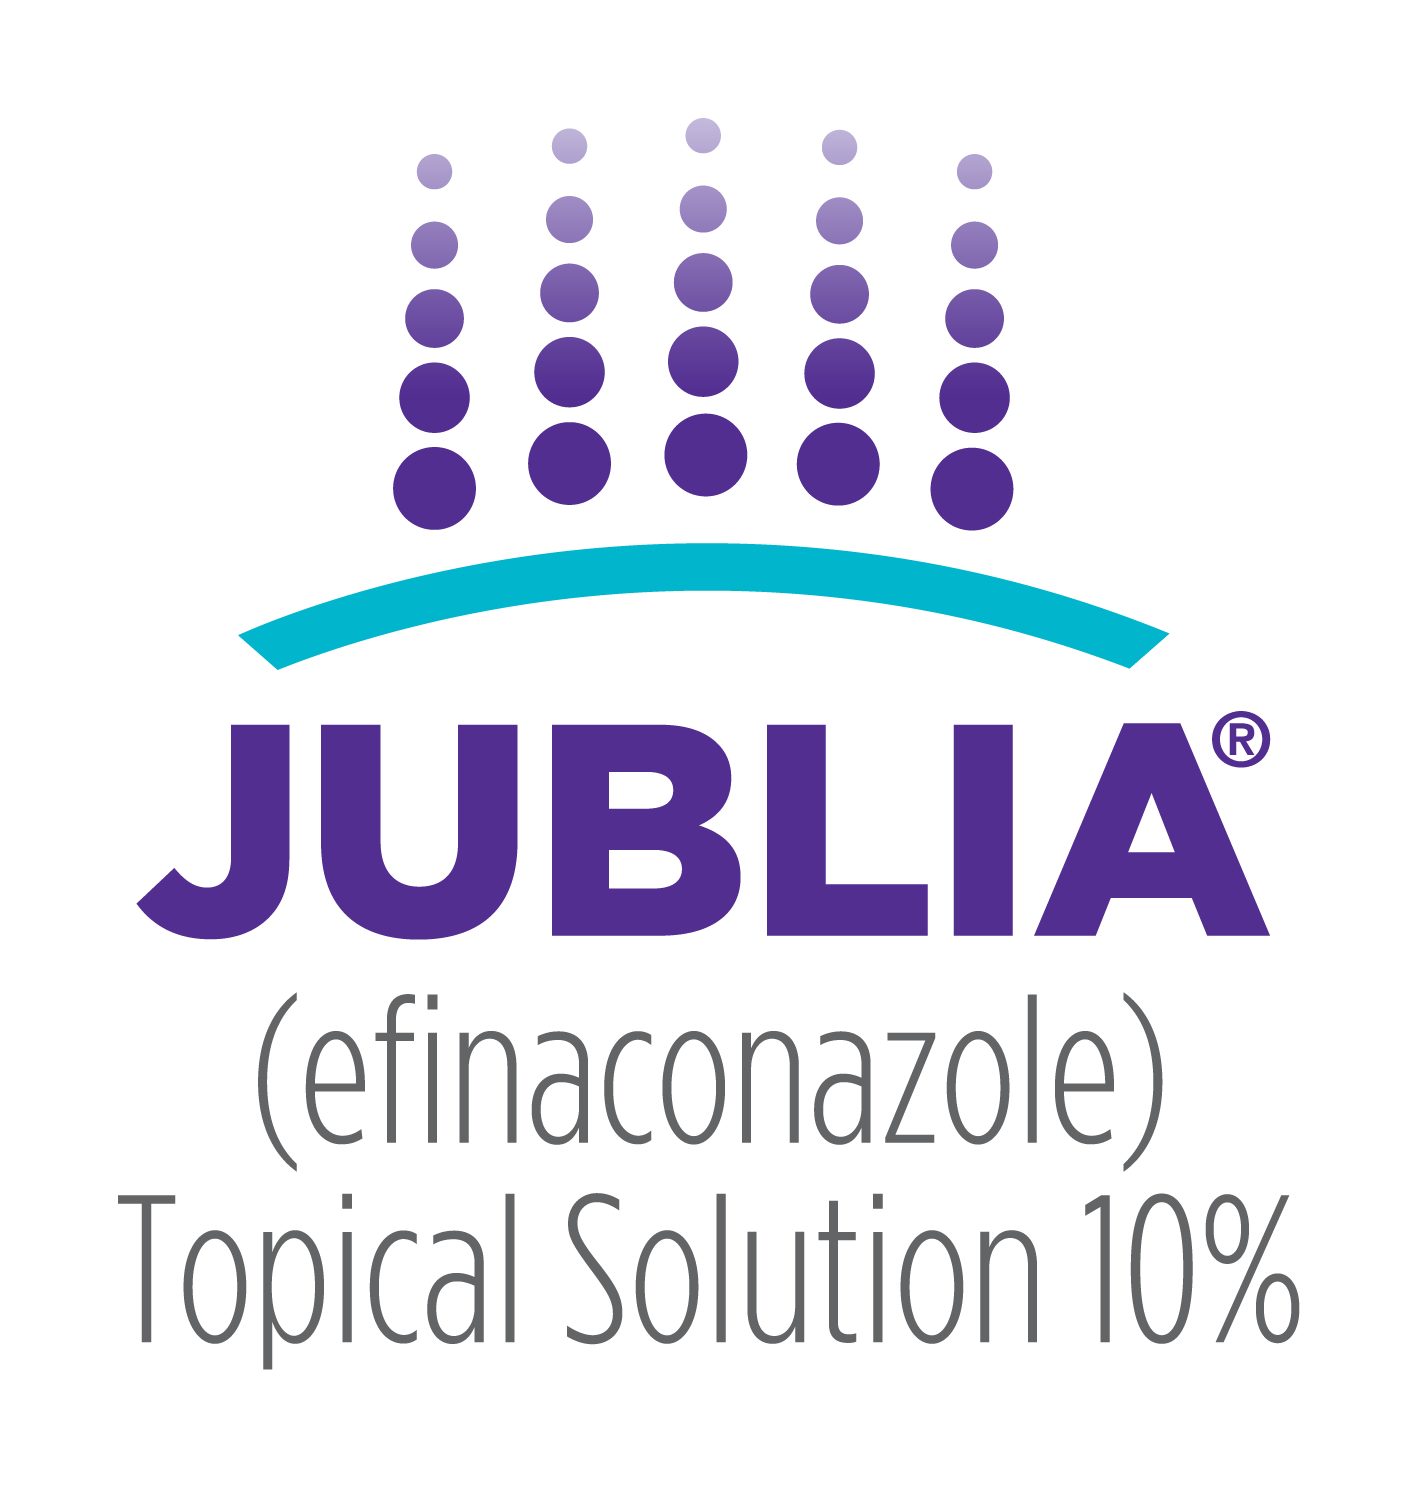 Jublia: A New Topical Treatment for Toenail Fungus